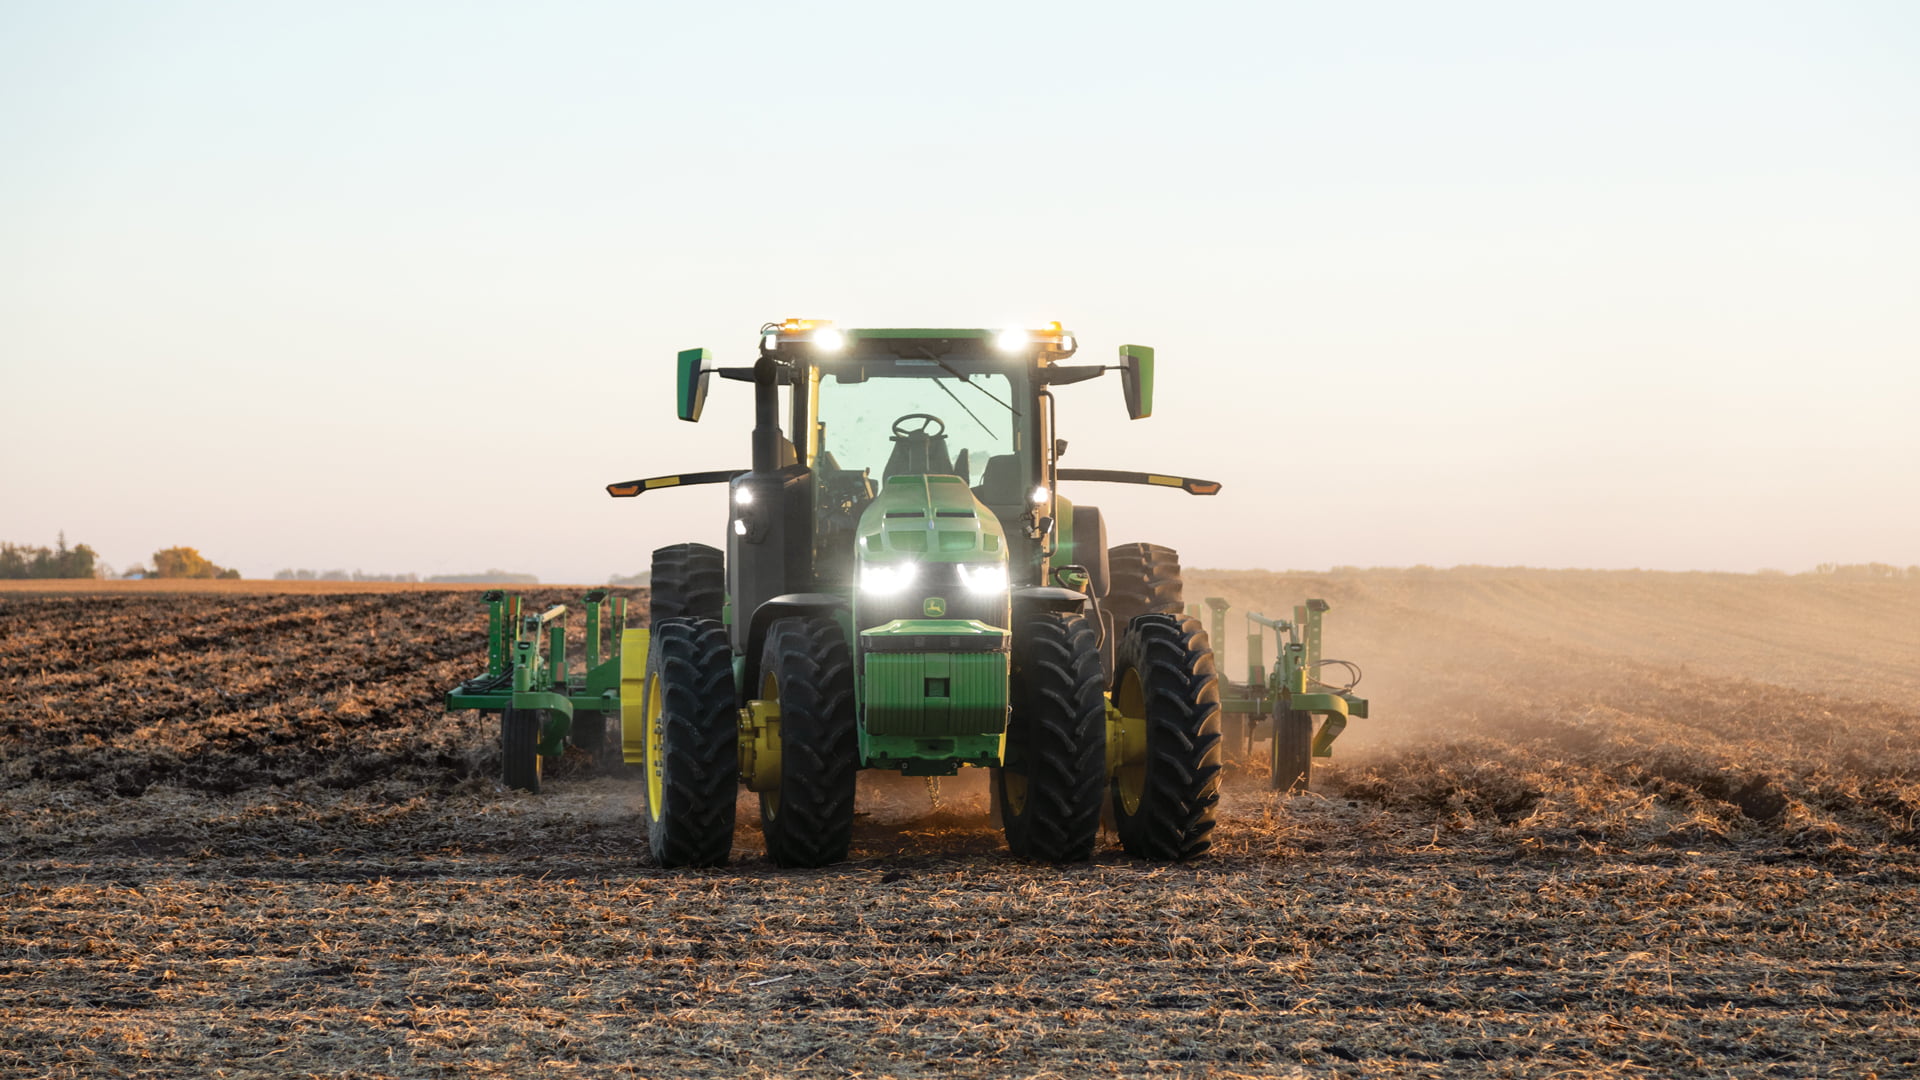 Vent et øjeblik Strædet thong afsnit Autonom fahrender Traktor pflügt Felder und entlastet Landwirte